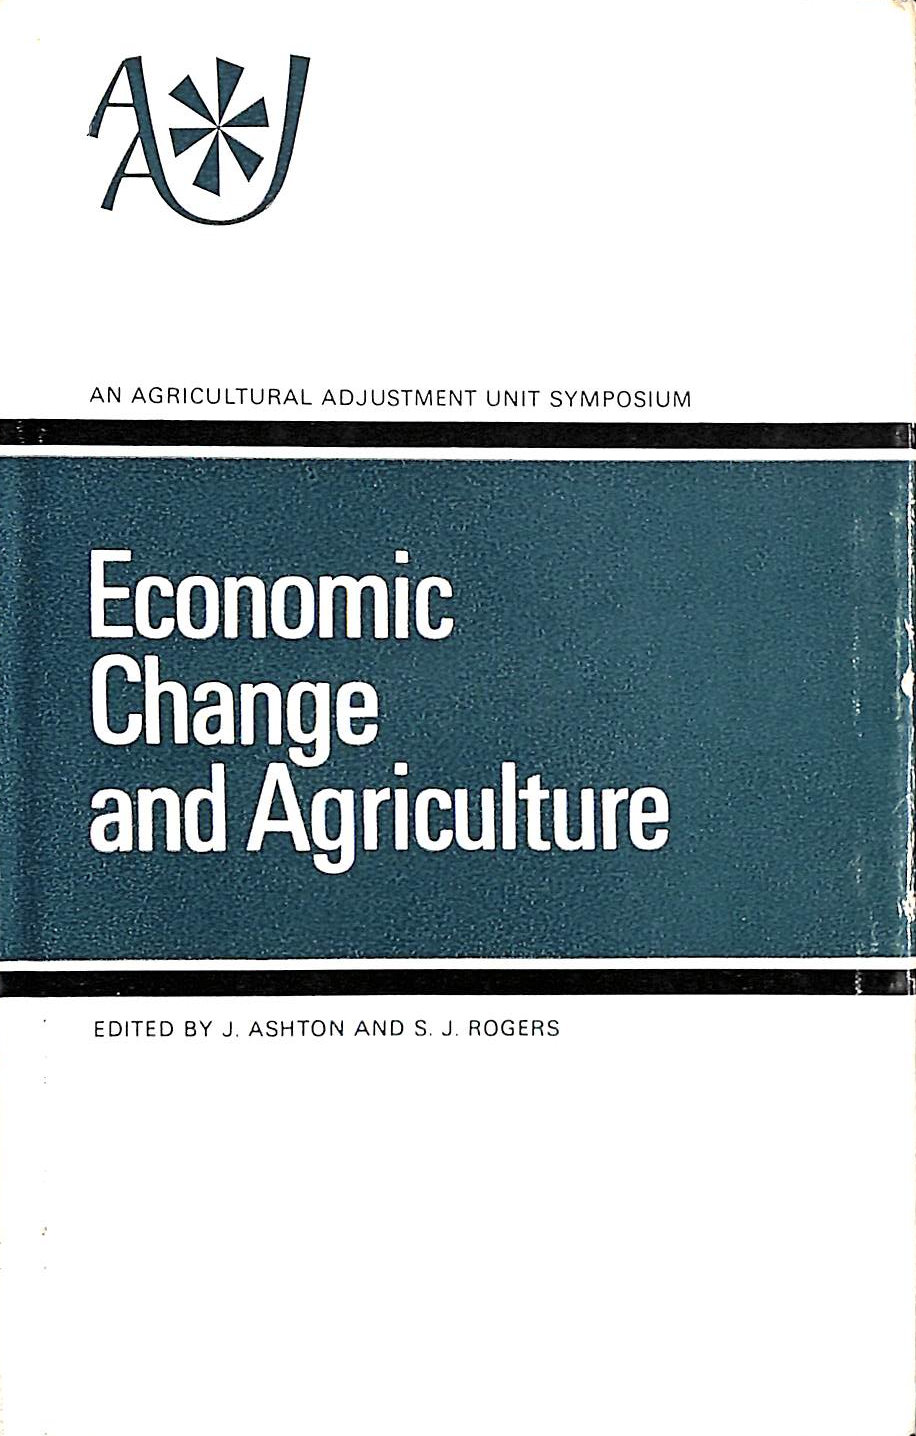 J ASHTON & S. J ROGERS - Economic Change and Agriculture